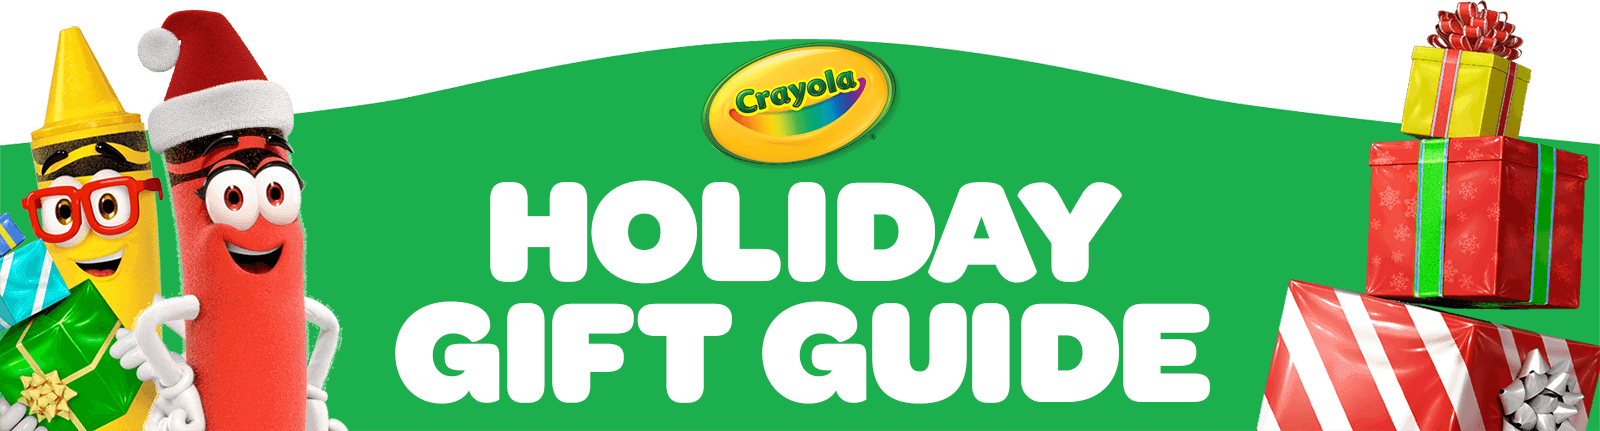 Crayola Holiday Gift Guide | Crayola.com